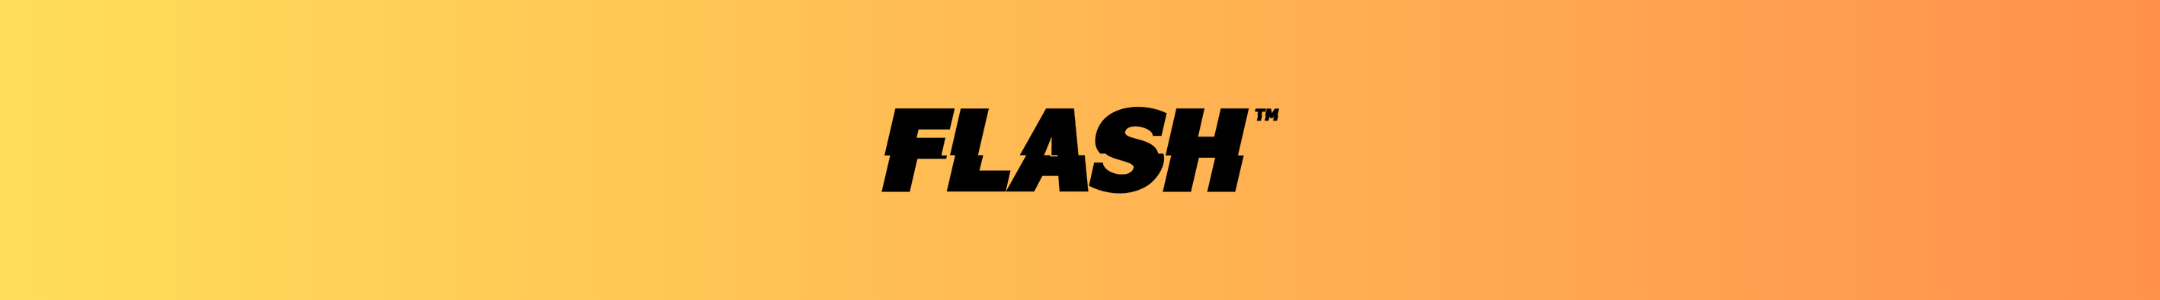 Flash™